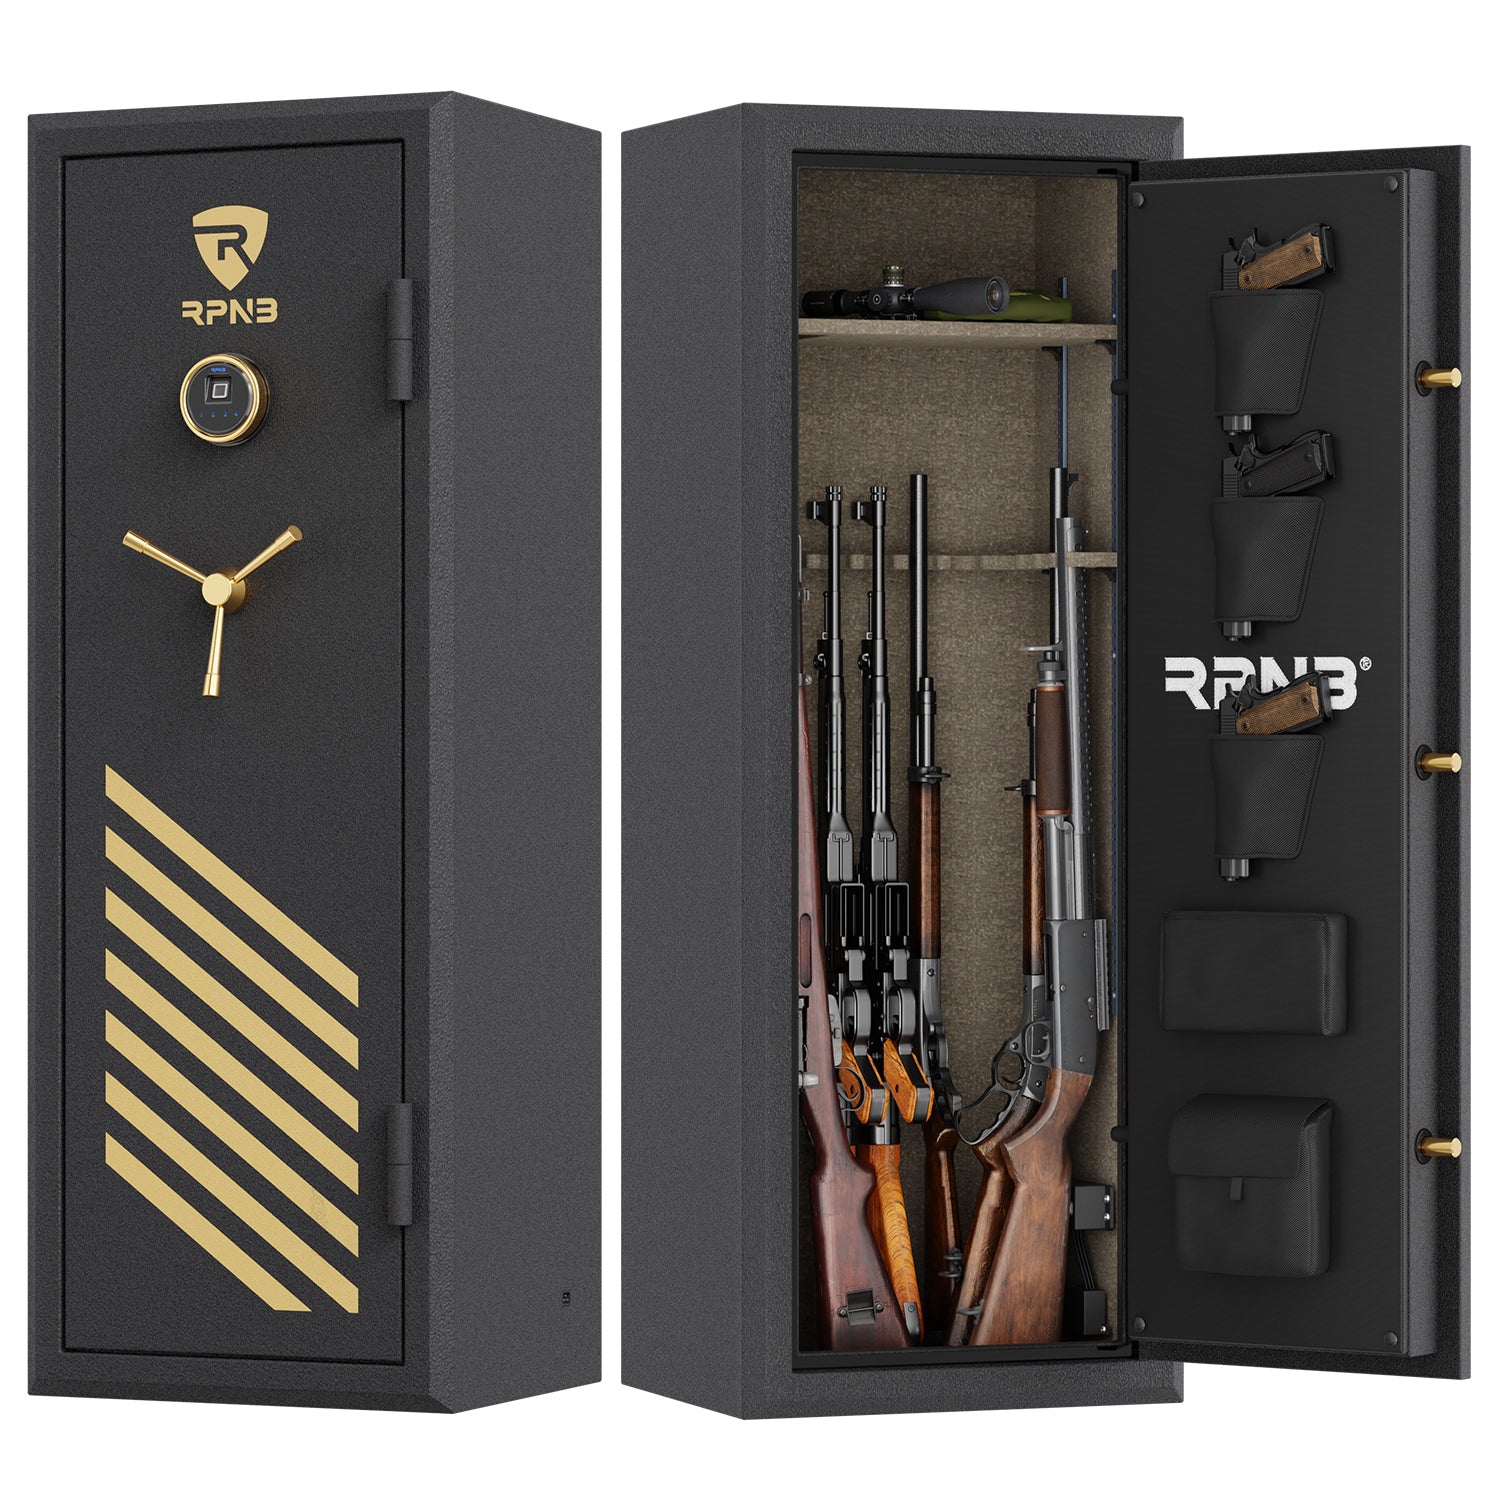 RPNB RPFS14-B 14 Gun Fireproof Biometric Gun Safe Black Door Open & Closed Empty